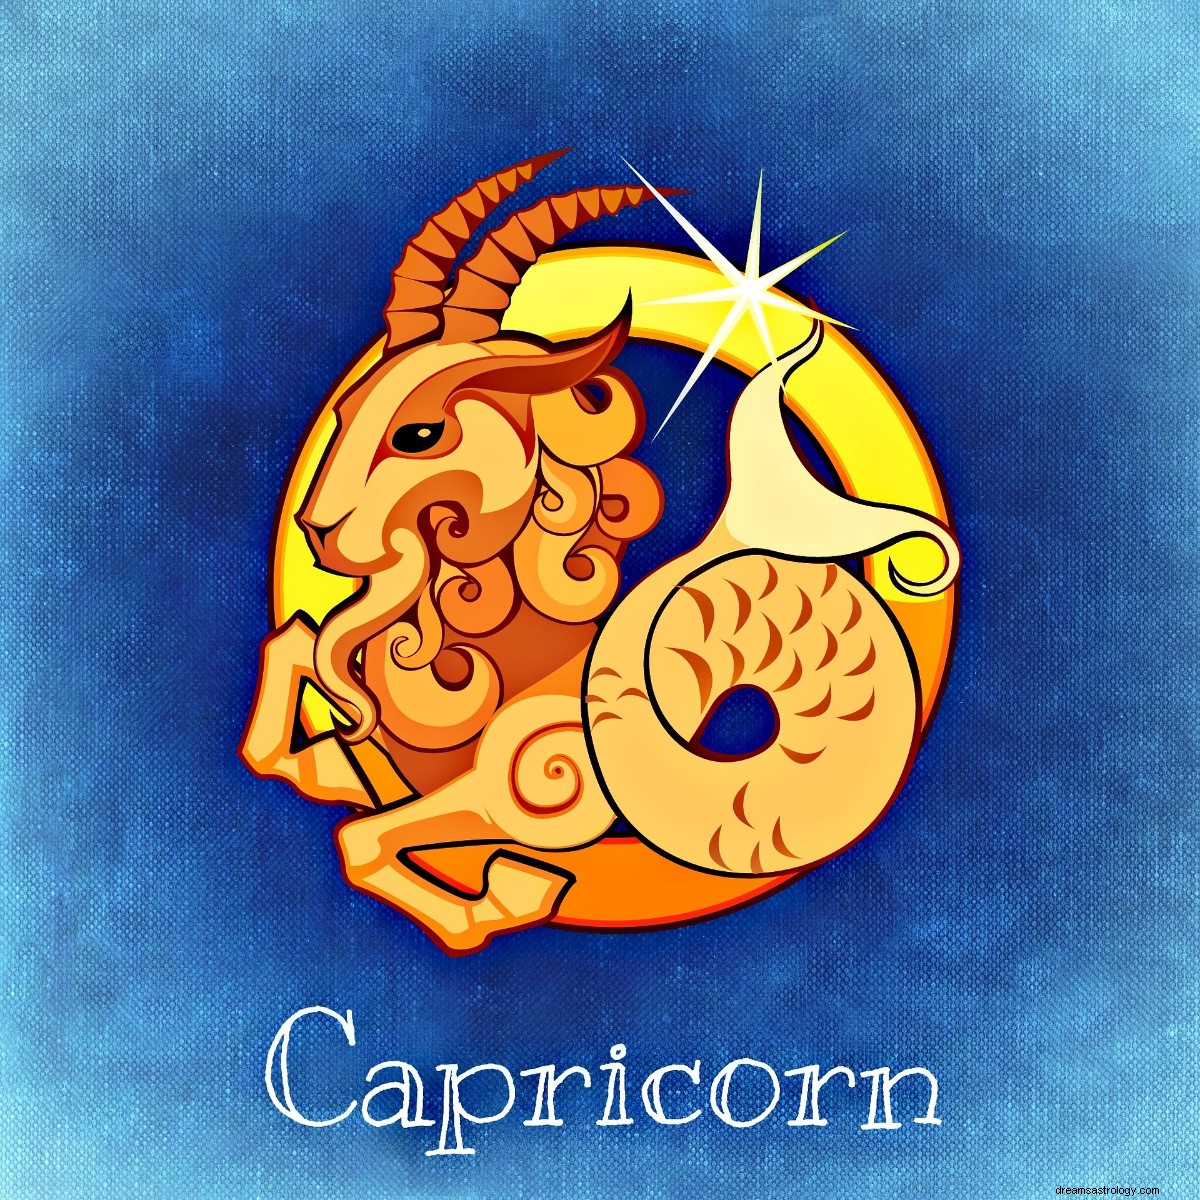 Lihat fakta MENARIK dan kurang diketahui ini tentang Capricorn 